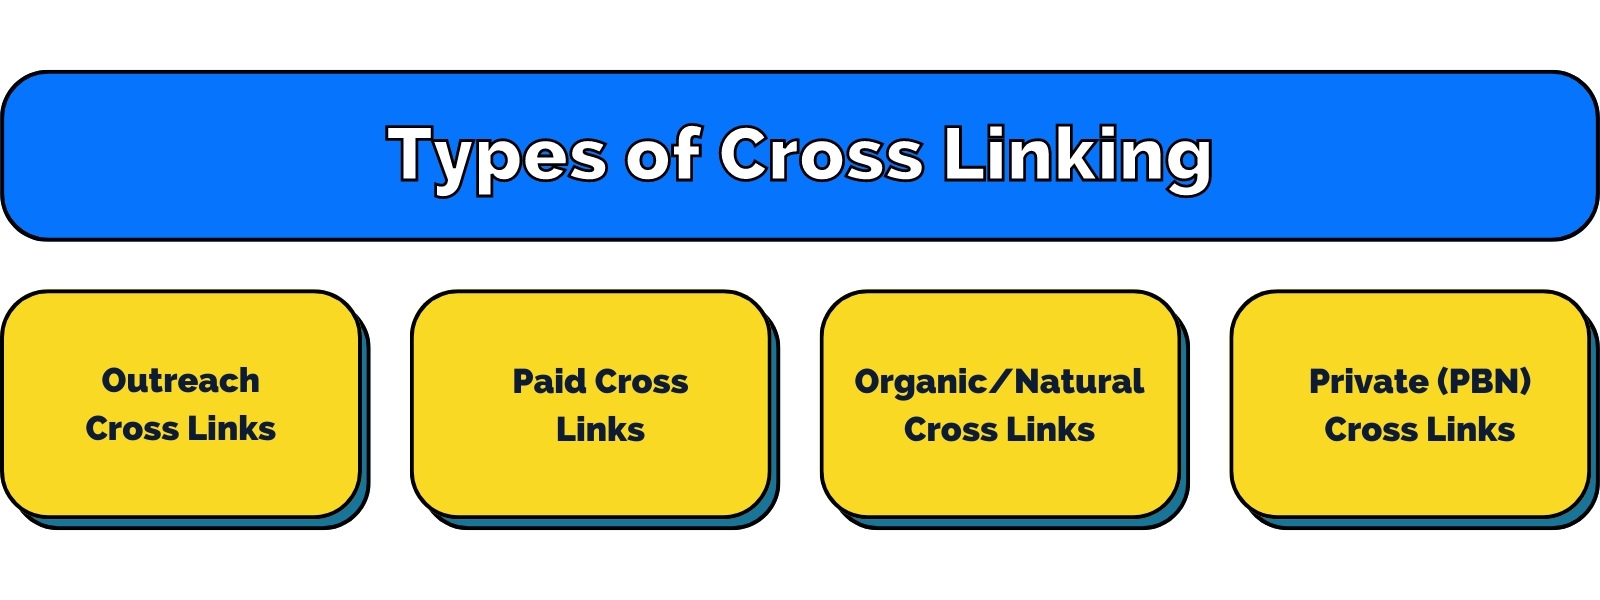 Types of Cross Linking